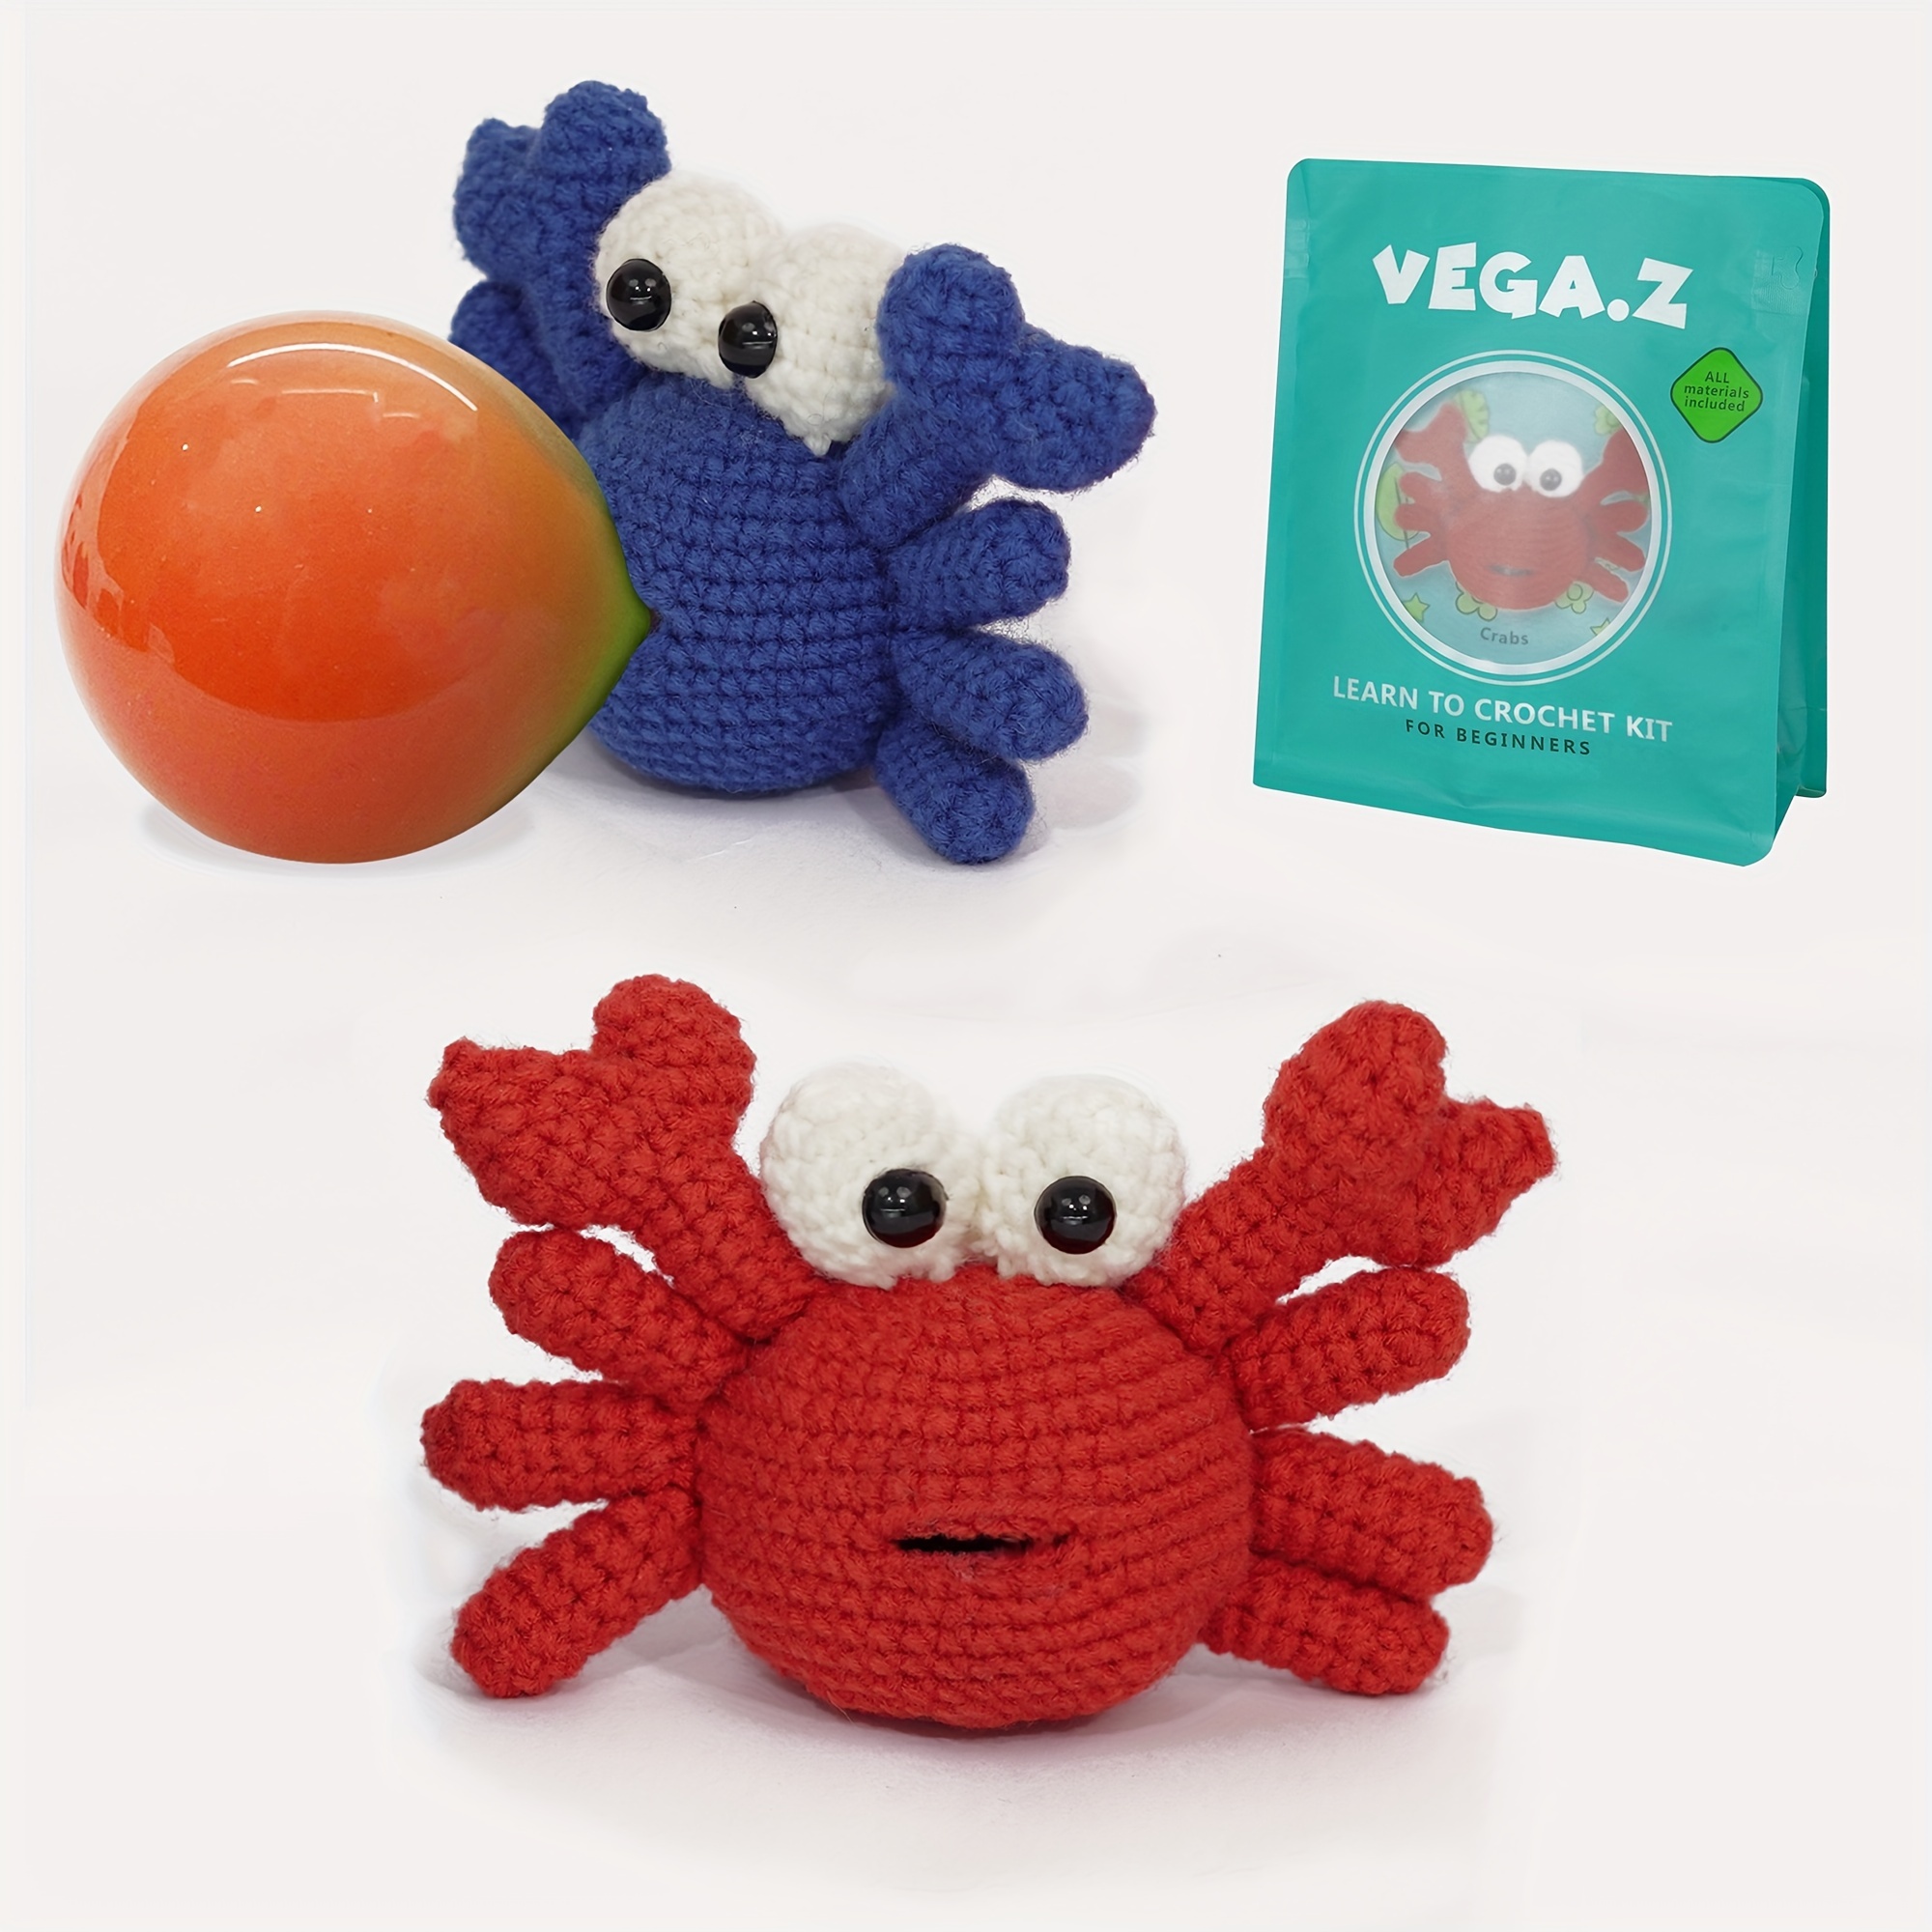 Wobbles Crochet Animal Kit Knitting Kit With Animal DIY Craft Art